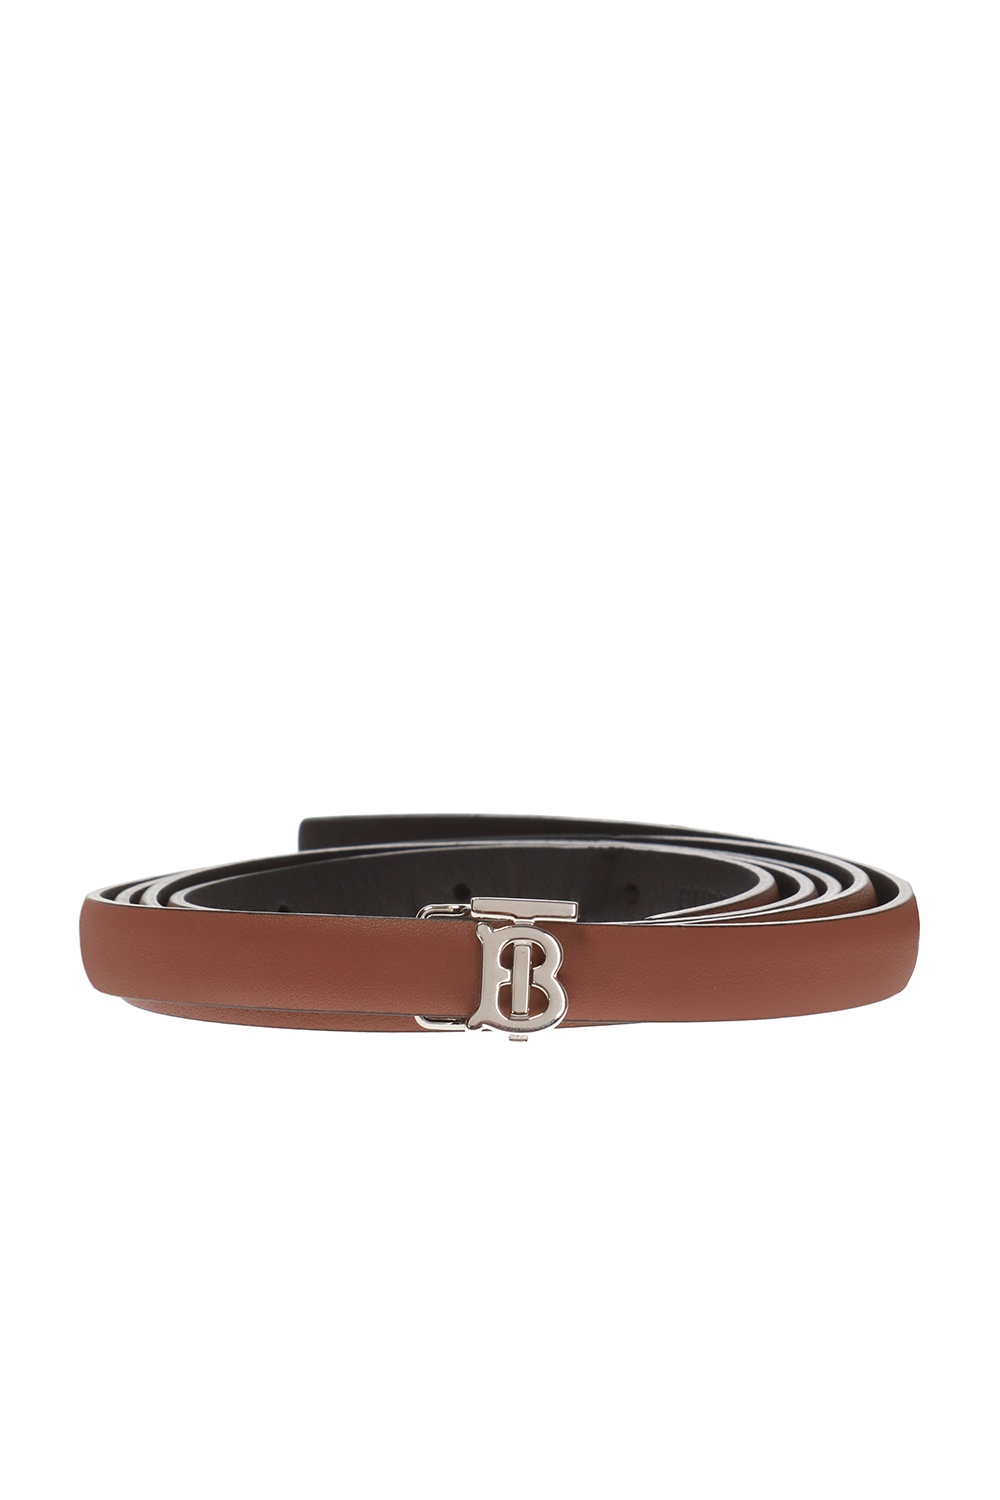 BURBERRY, Brown Women's Regular Belt